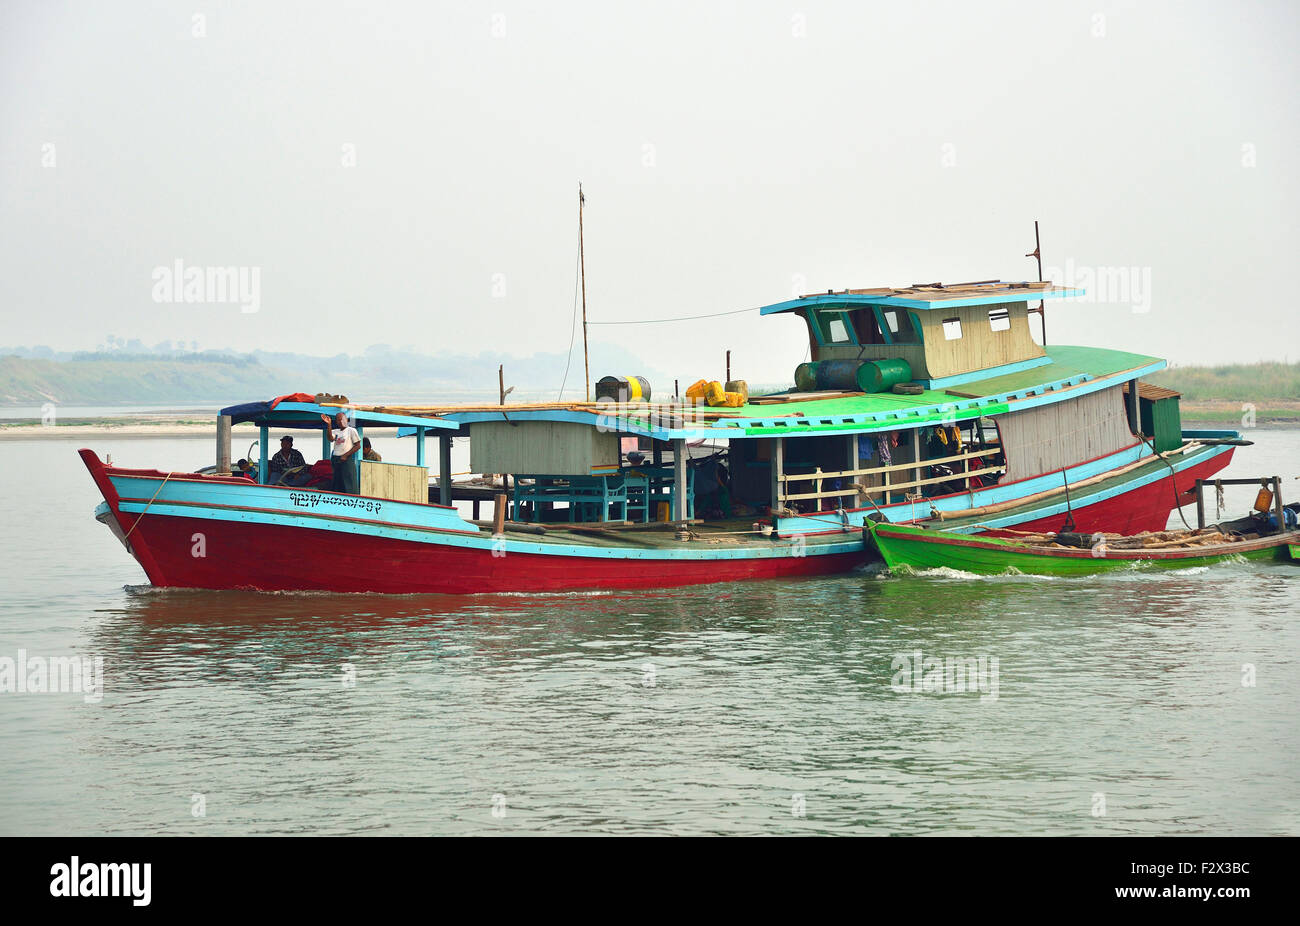 Frachtschiff auf dem Irrawaddy River (Ayeyarwady River) in der Nähe von Mandalay, Myanmar, (Burma, Birma) Asien Stockfoto